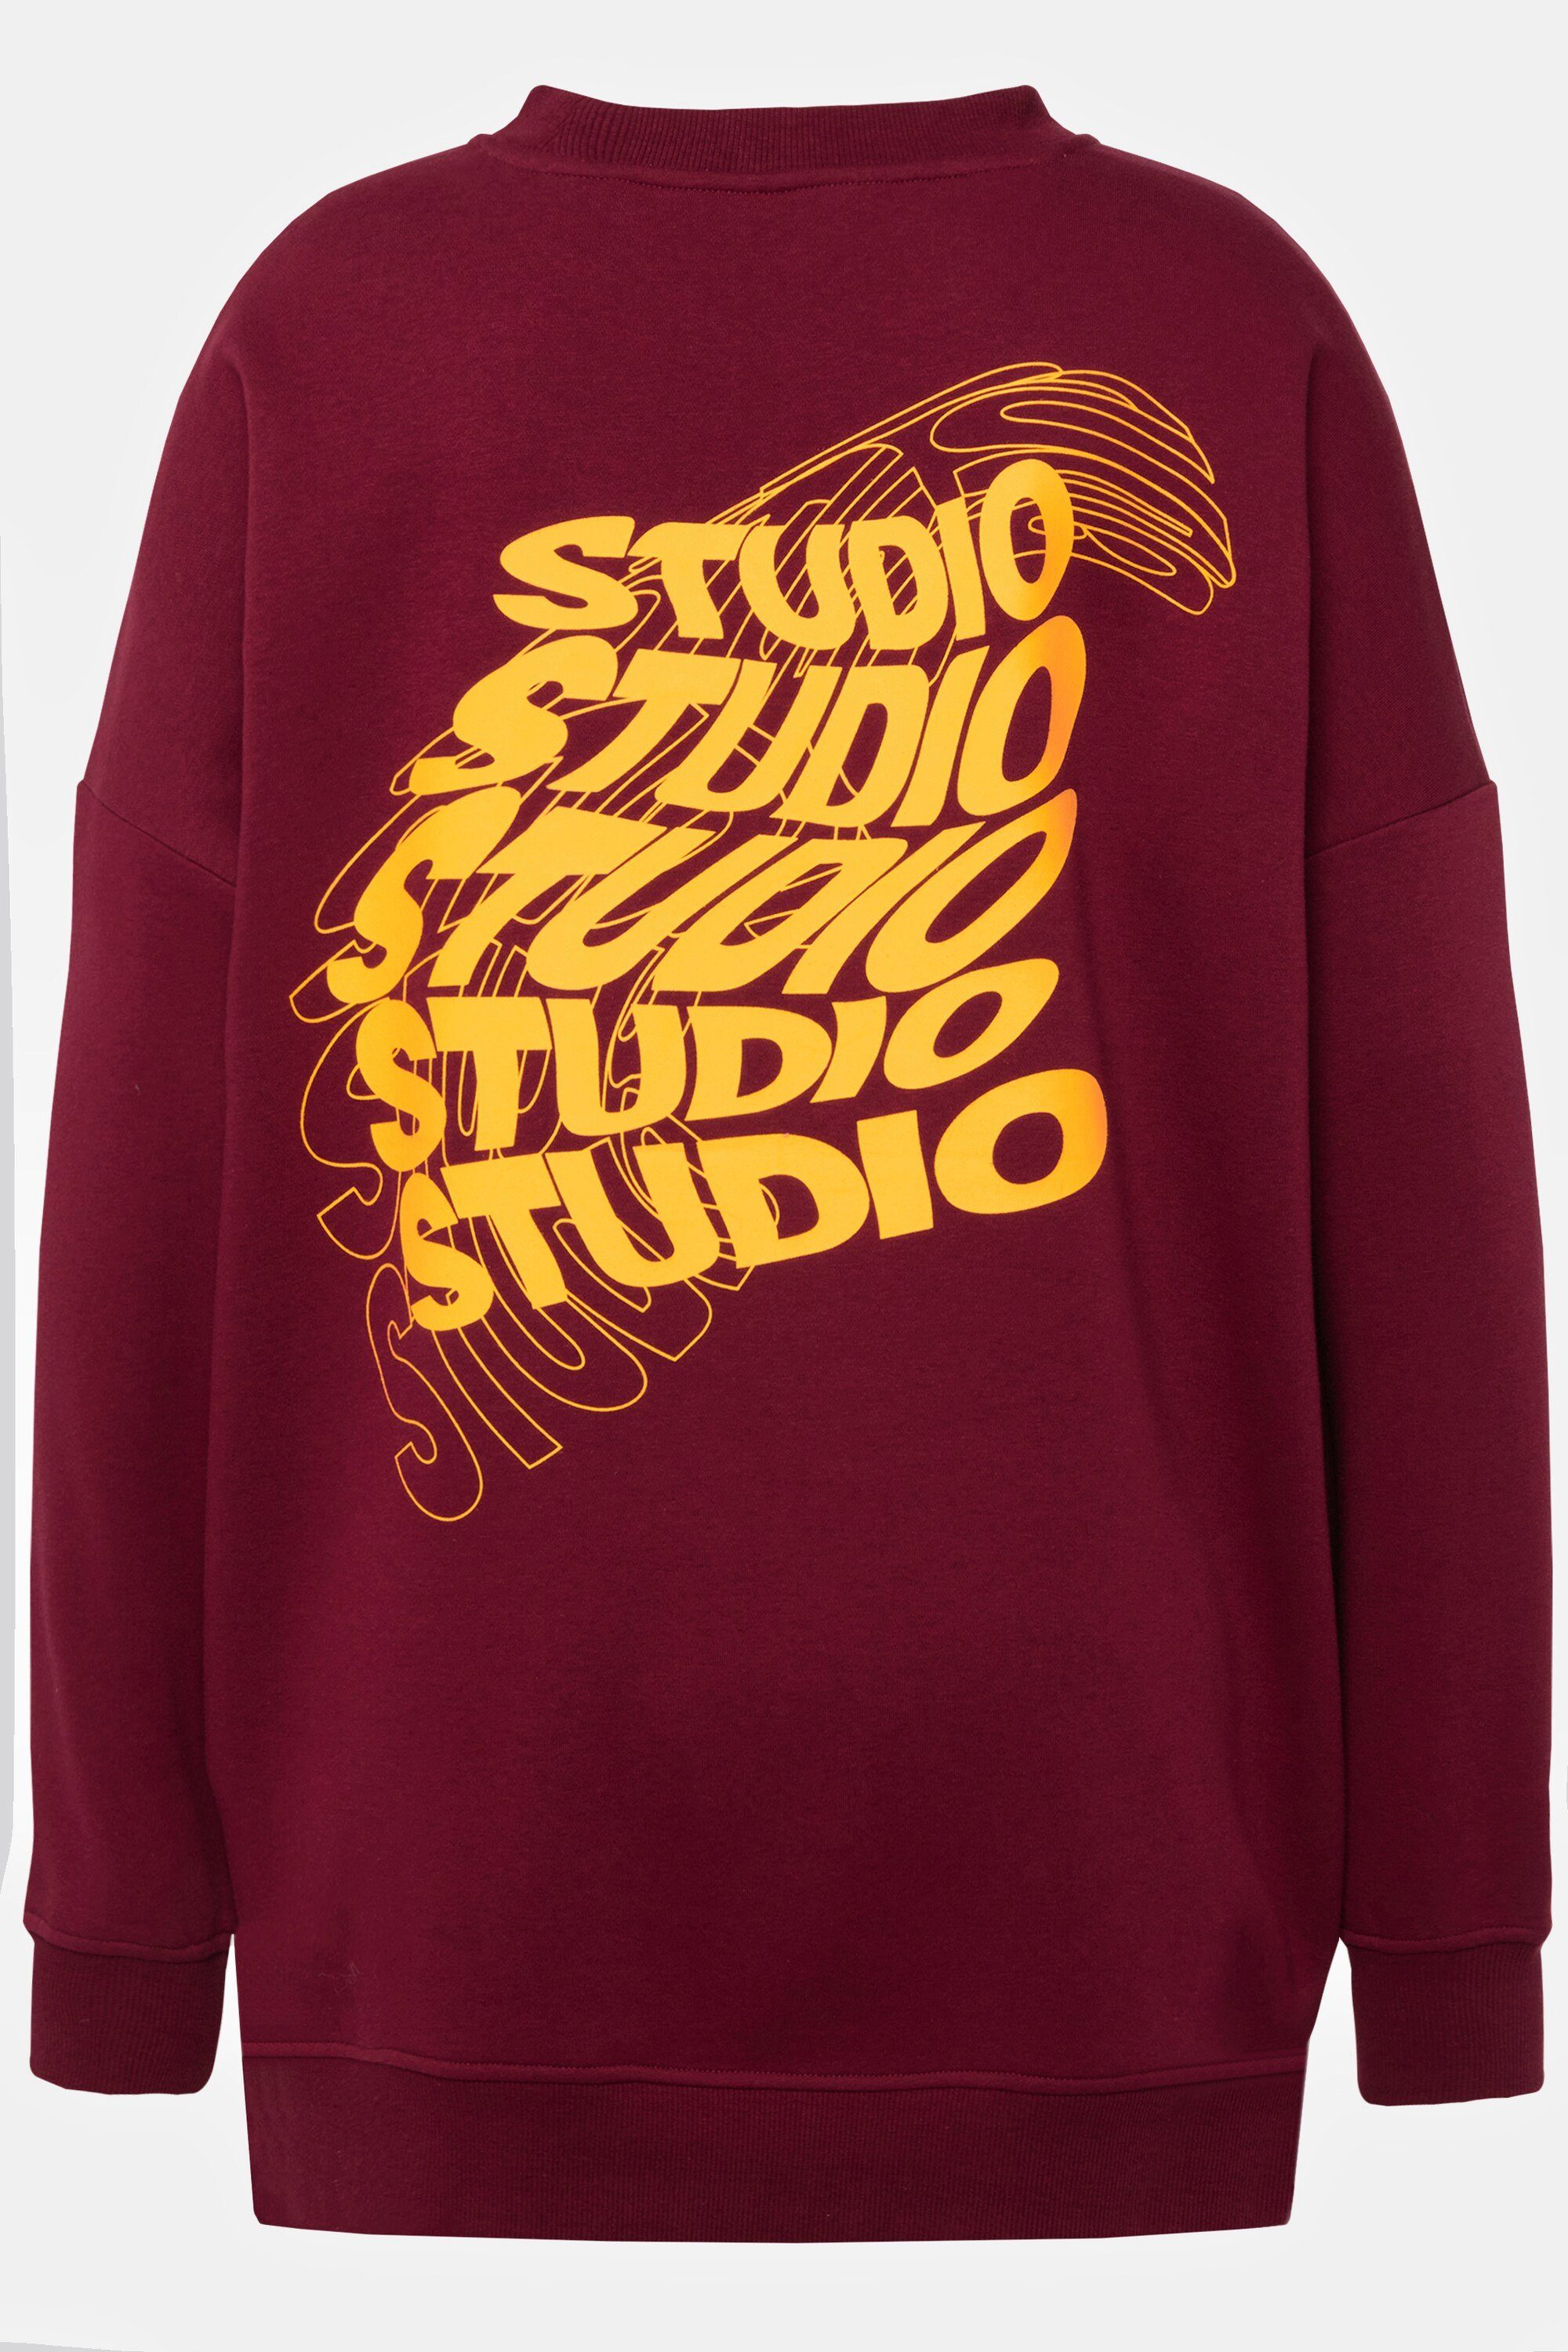 Untold oversized Rücken Langarm Rundhals Studio Sweatshirt Sweatshirt Print